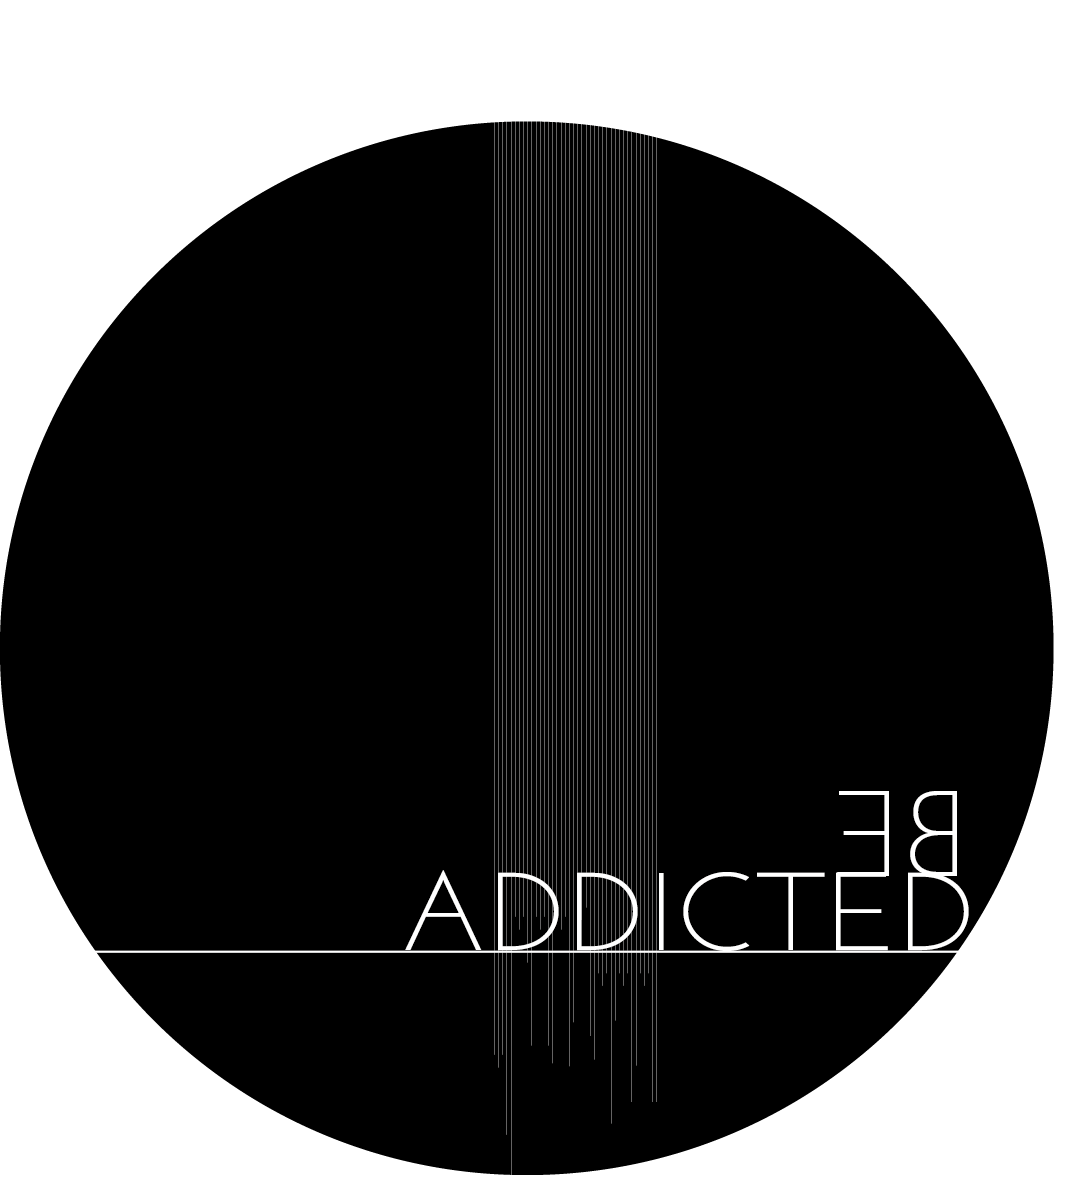 Be addicted